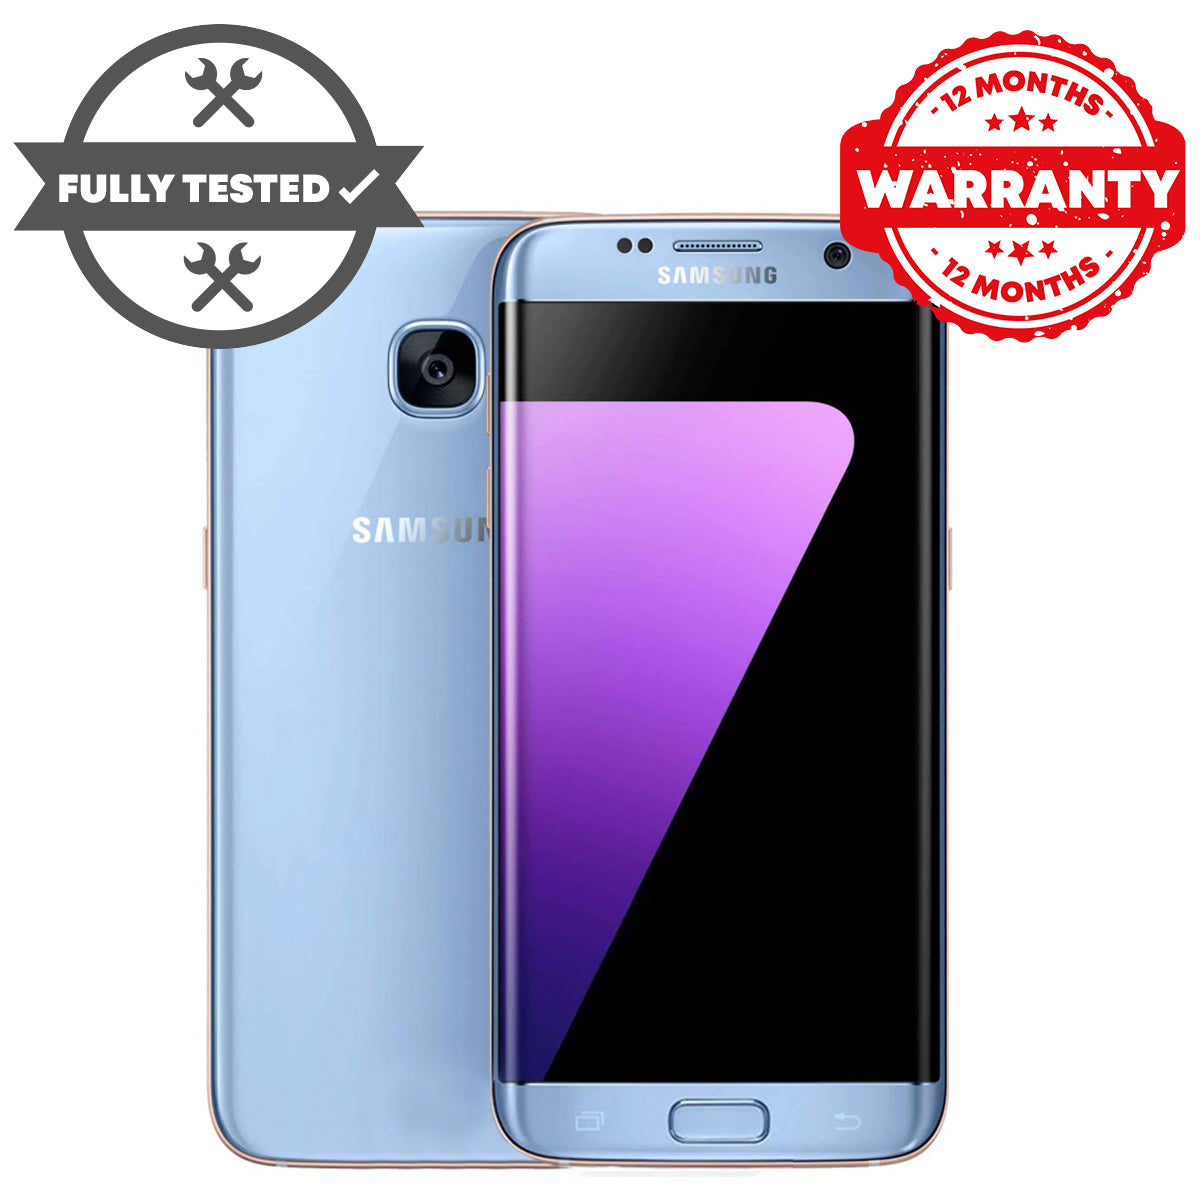 Samsung Galaxy S7 Edge  Blue Sim Free - Unlocked